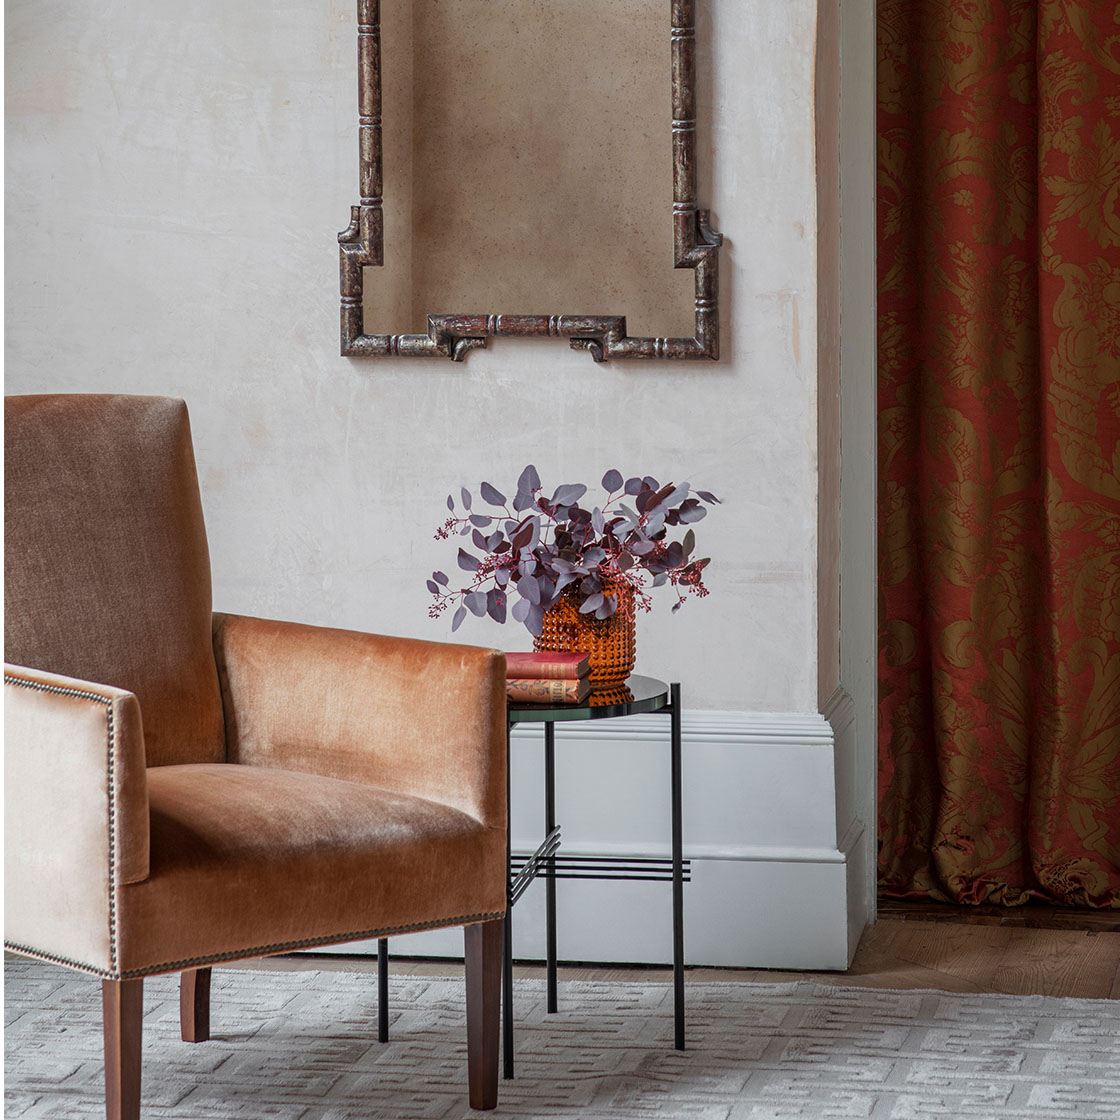 Nicholas chair in Capri silk velvet - Copper with Cathay mirror - Beaumont & Fletcher